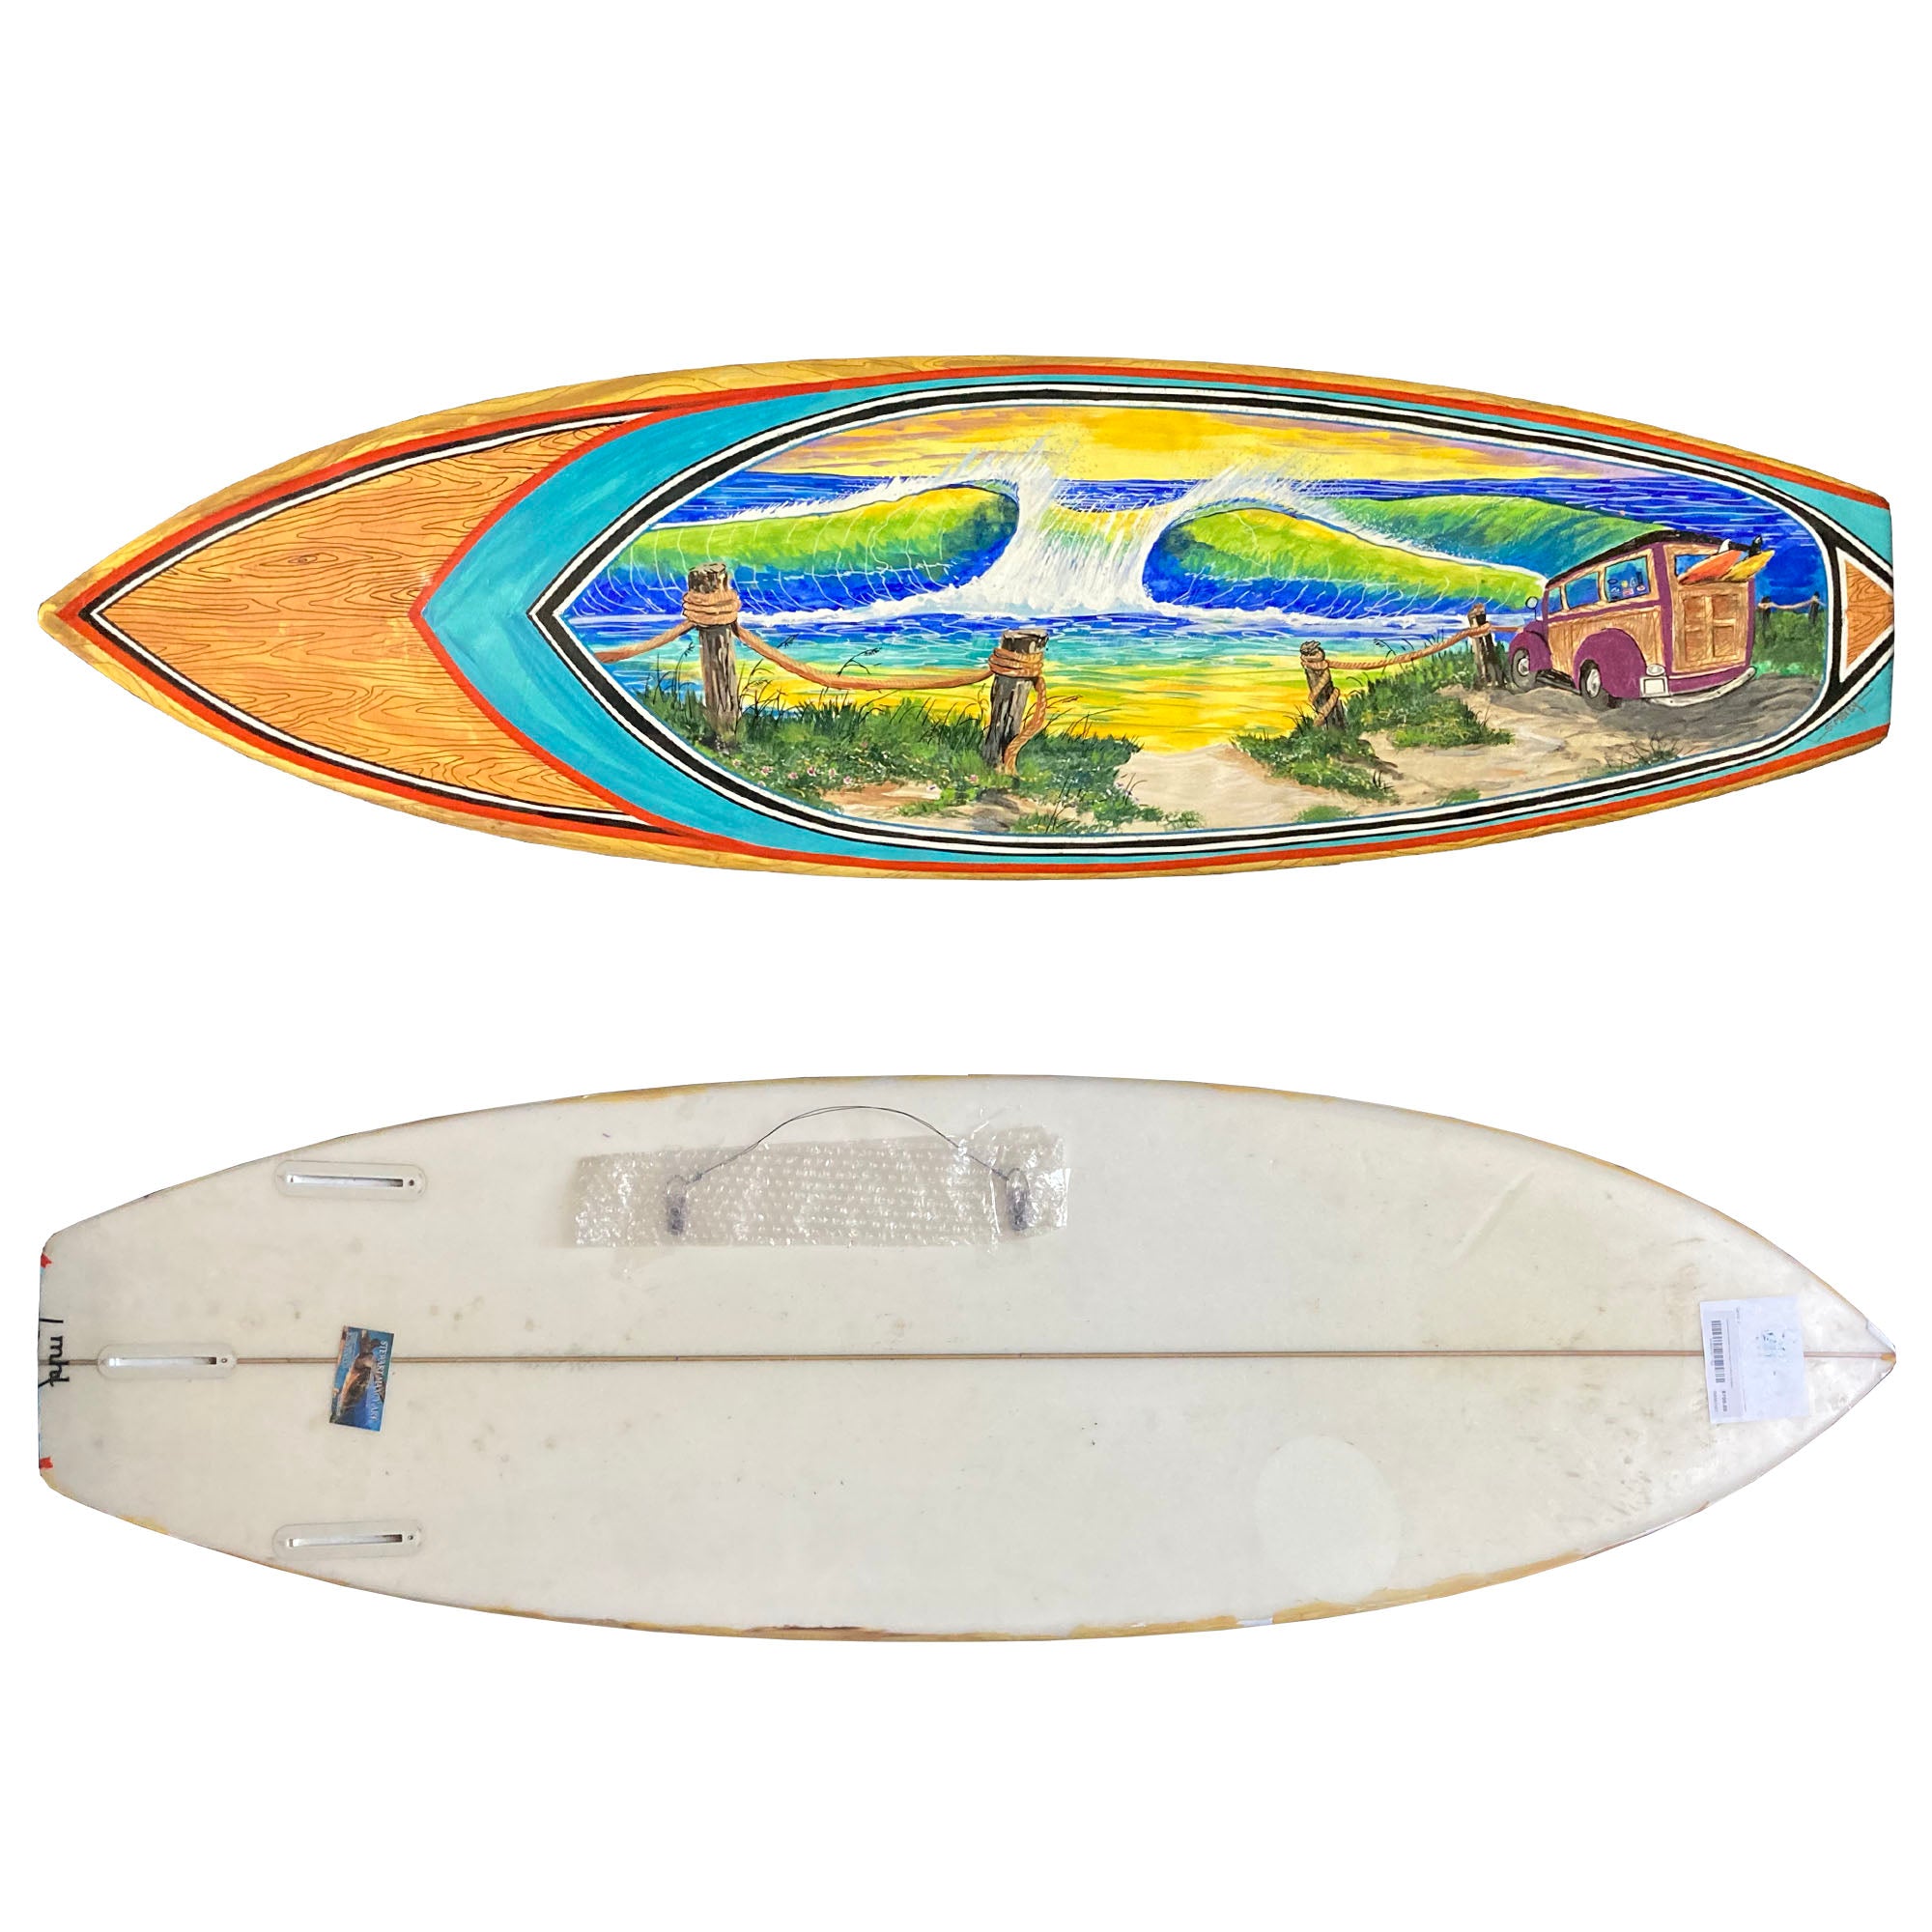 Stewart Maxcy Woody A-Frame Original Art Collector Surfboard